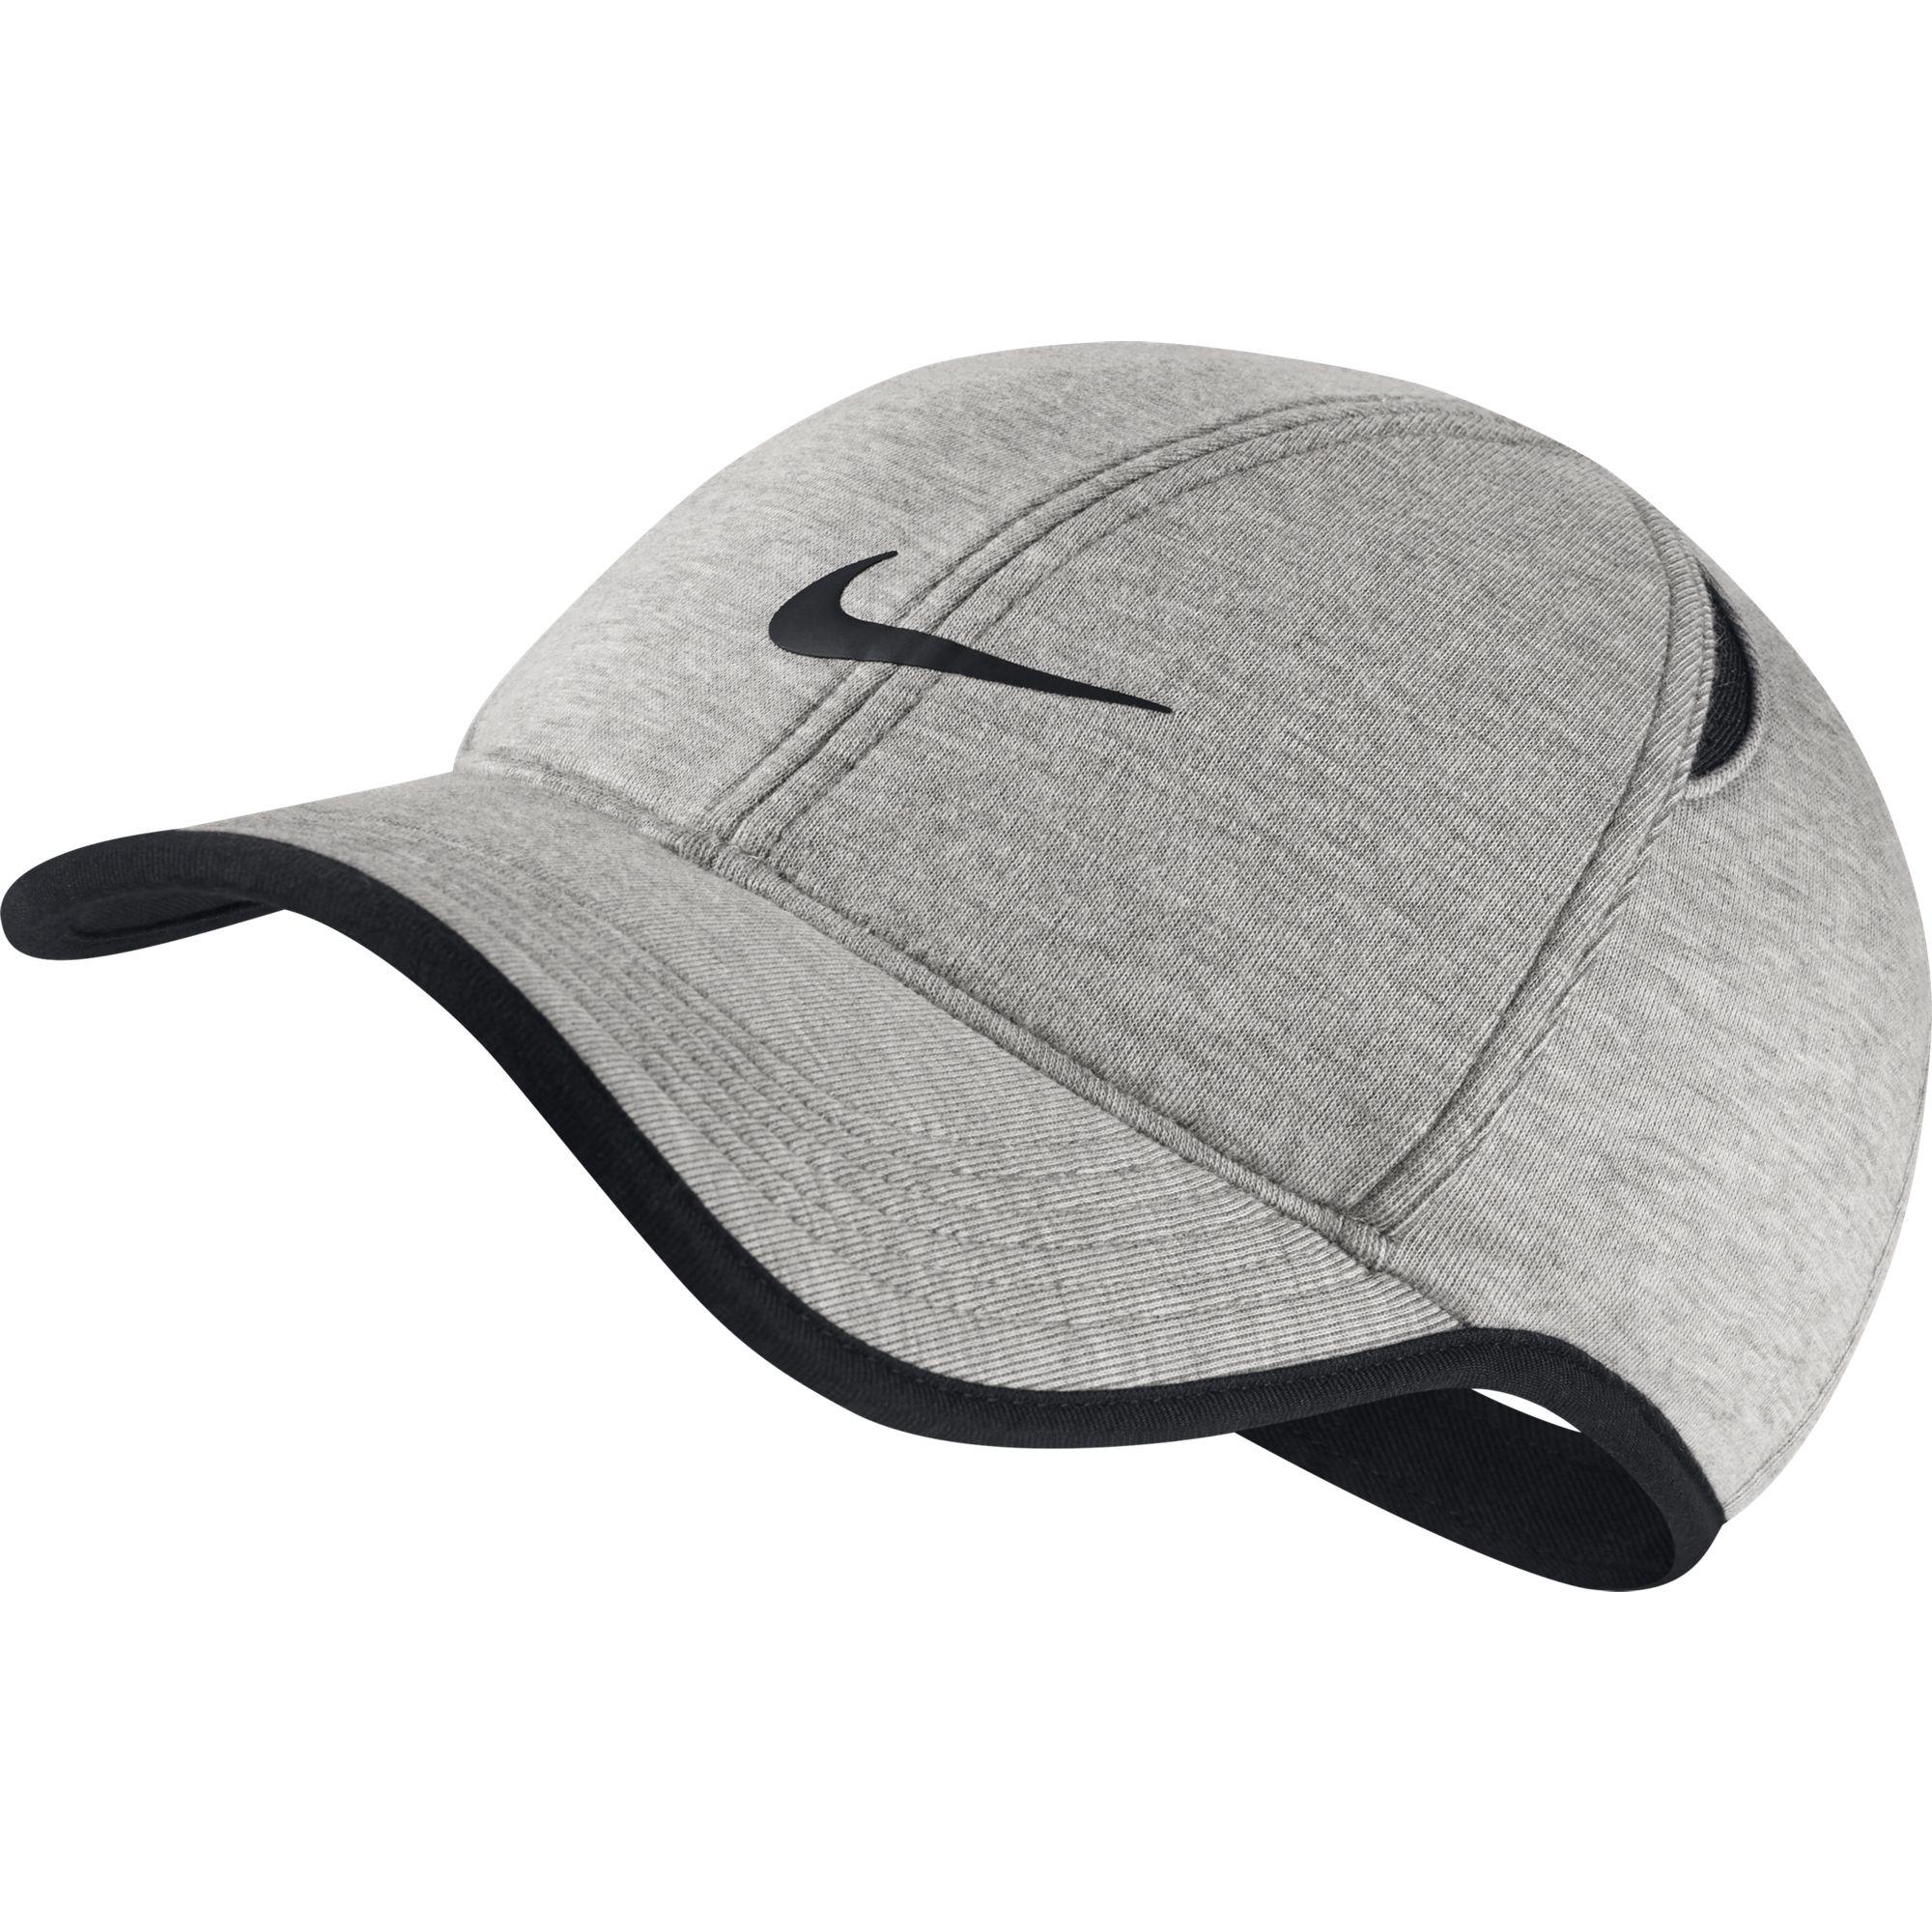 Nike AeroBill Featherlight Adjustable Cap - Grey Heather - Tennisnuts.com